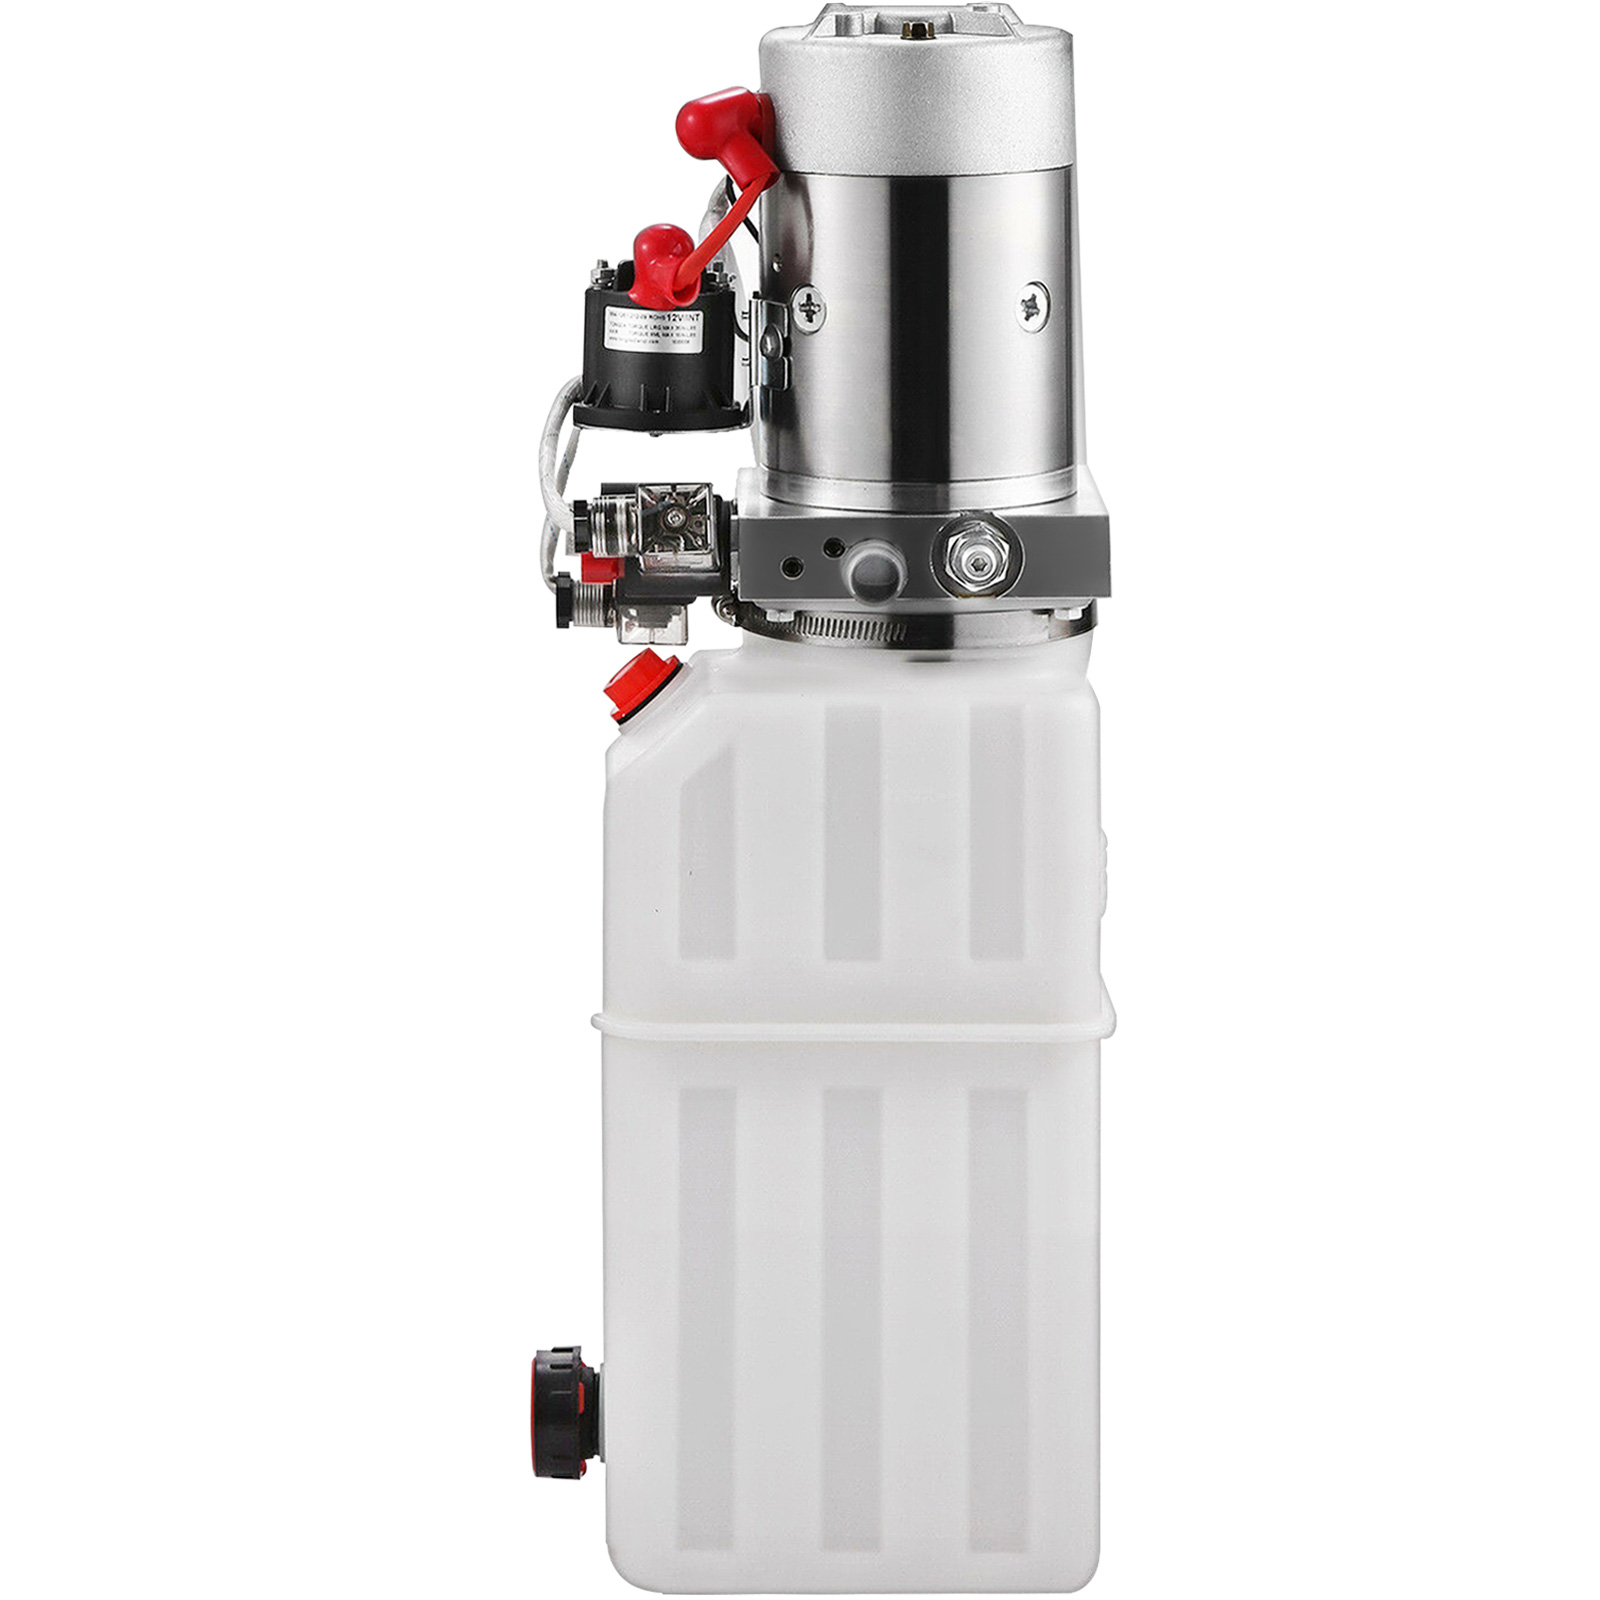 Anhänger Hydraulik Pumpe 12 V Volt 180 bar 2000W LKW Hydraulikaggregat Kipper 